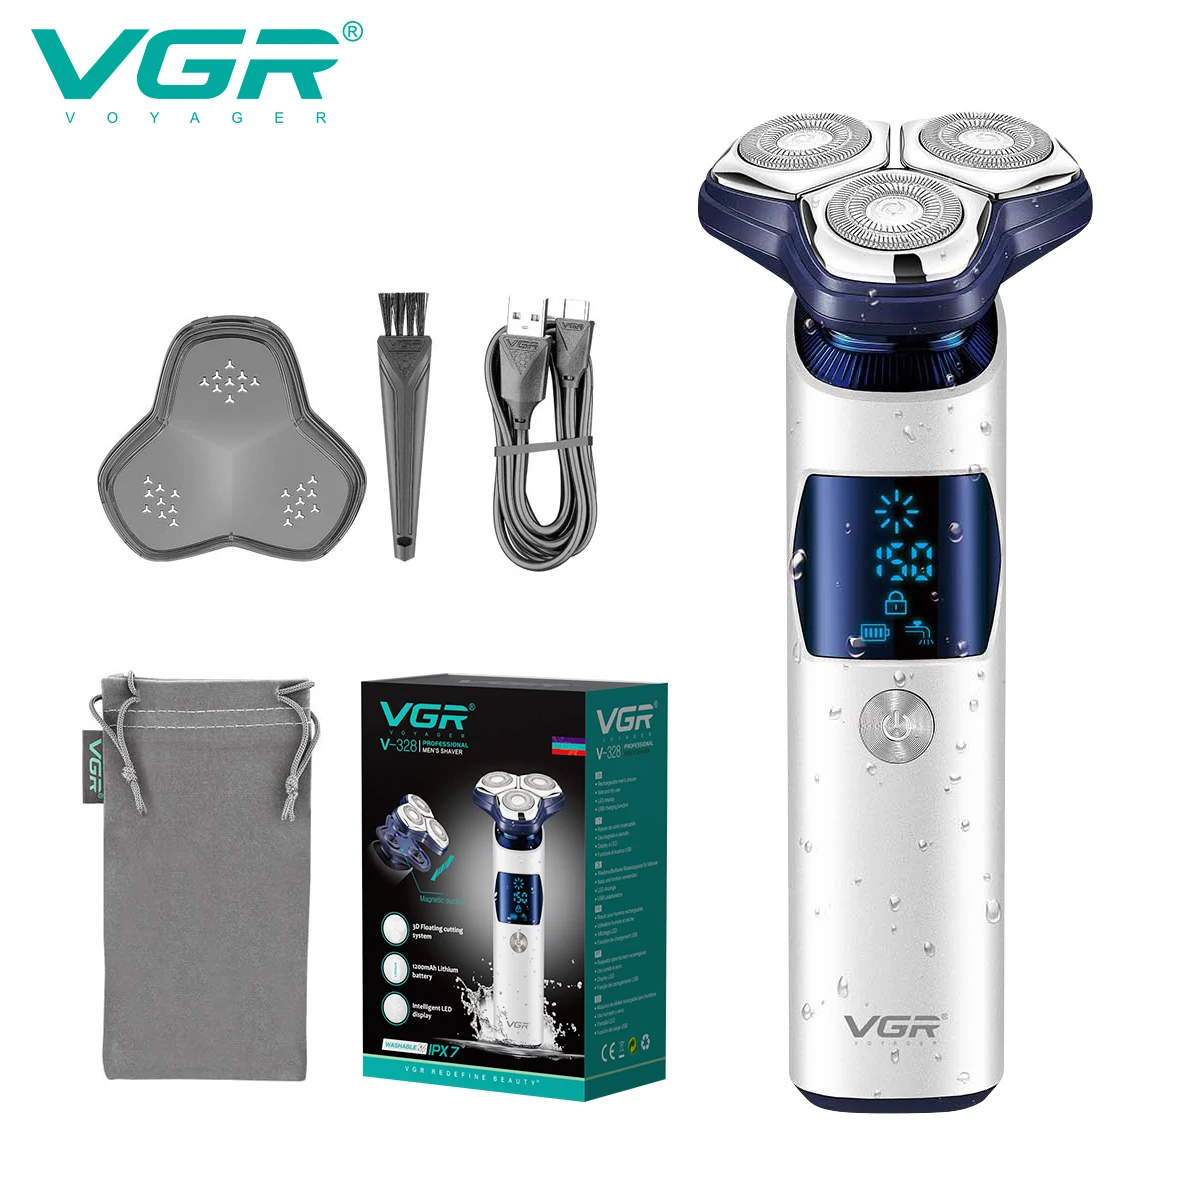 

VGR Razor Waterproof Hair Trimmer Electric Shaver Professional Beard Trimmer Digital Display Razors Hair Trimmer for Men V-328